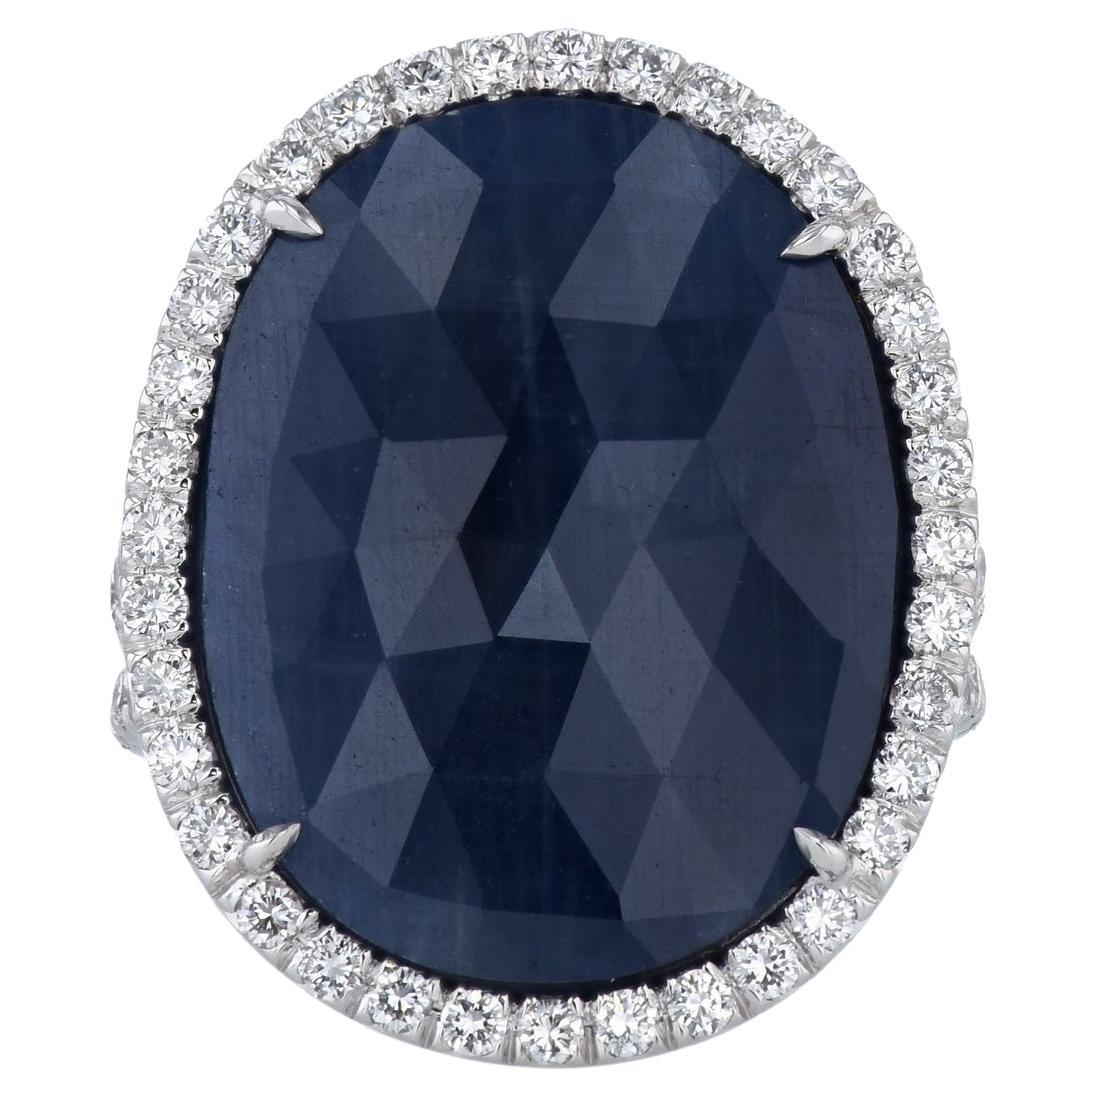 Handmade Sliced Blue Sapphire Diamond Pave Halo Cocktail Ring 18 Karat Gold 